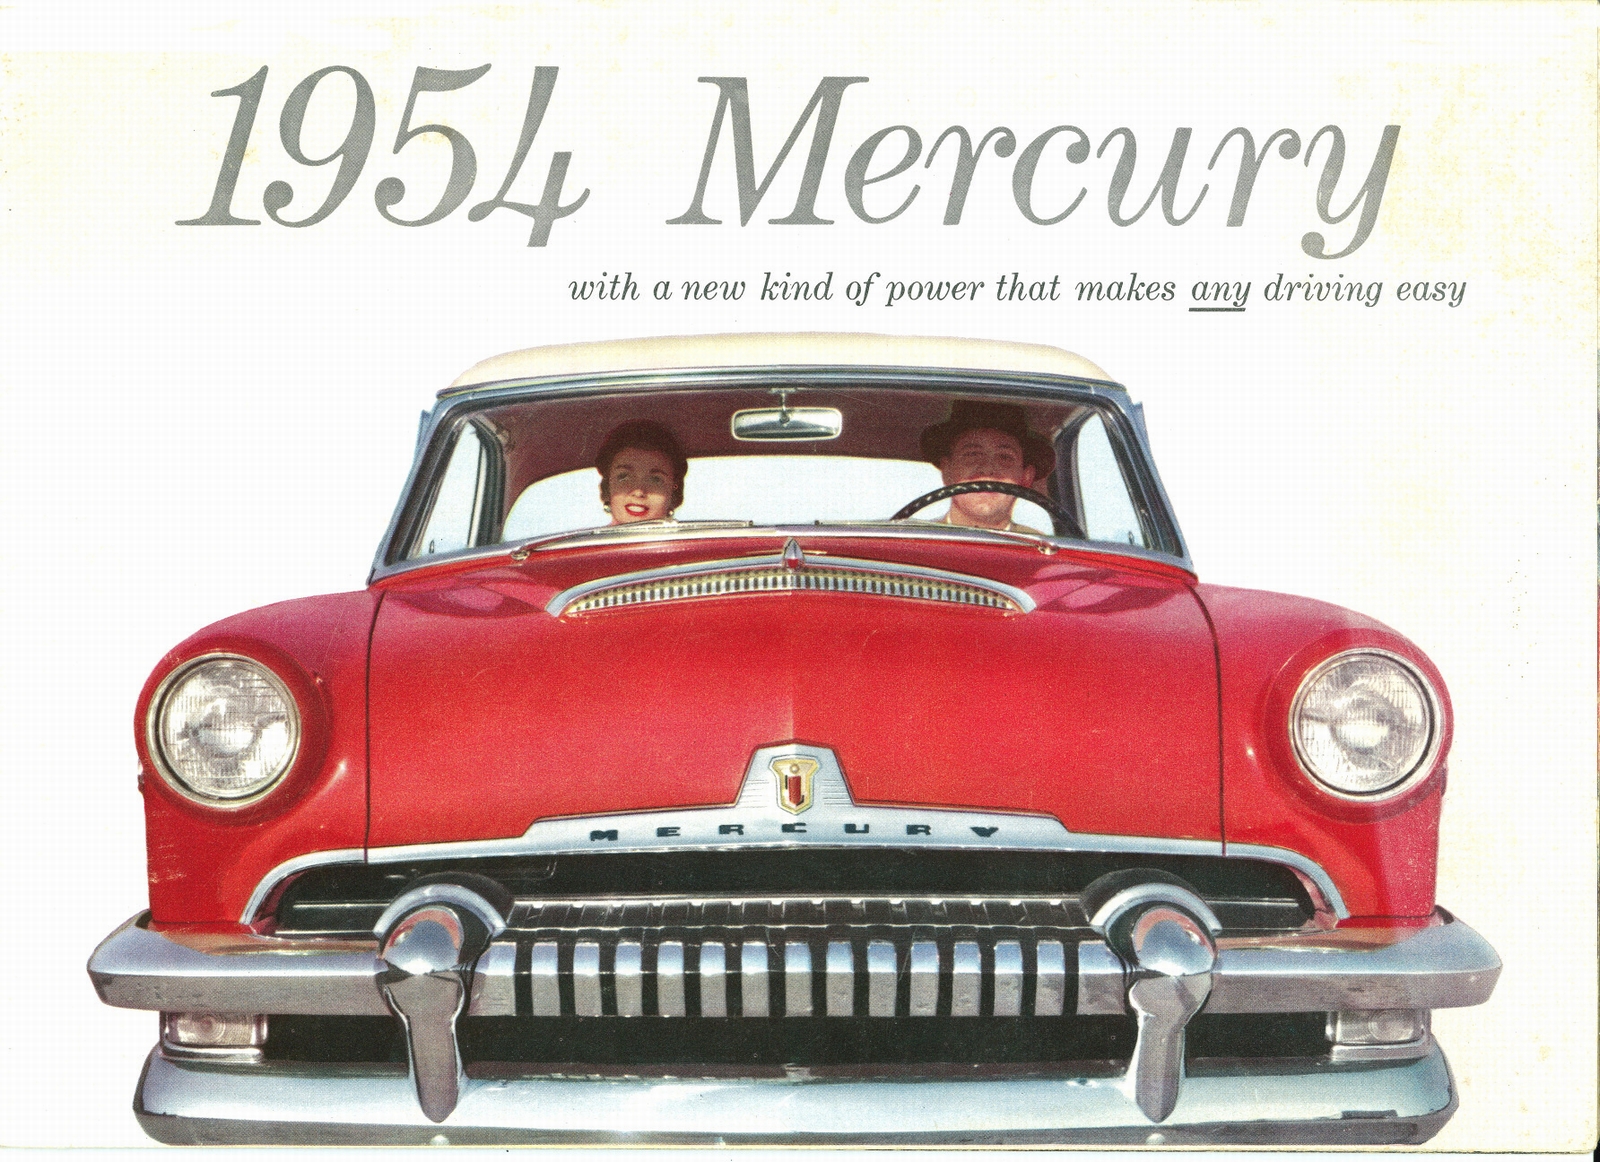 n_1954 Mercury Deluxe Foldout-01.jpg